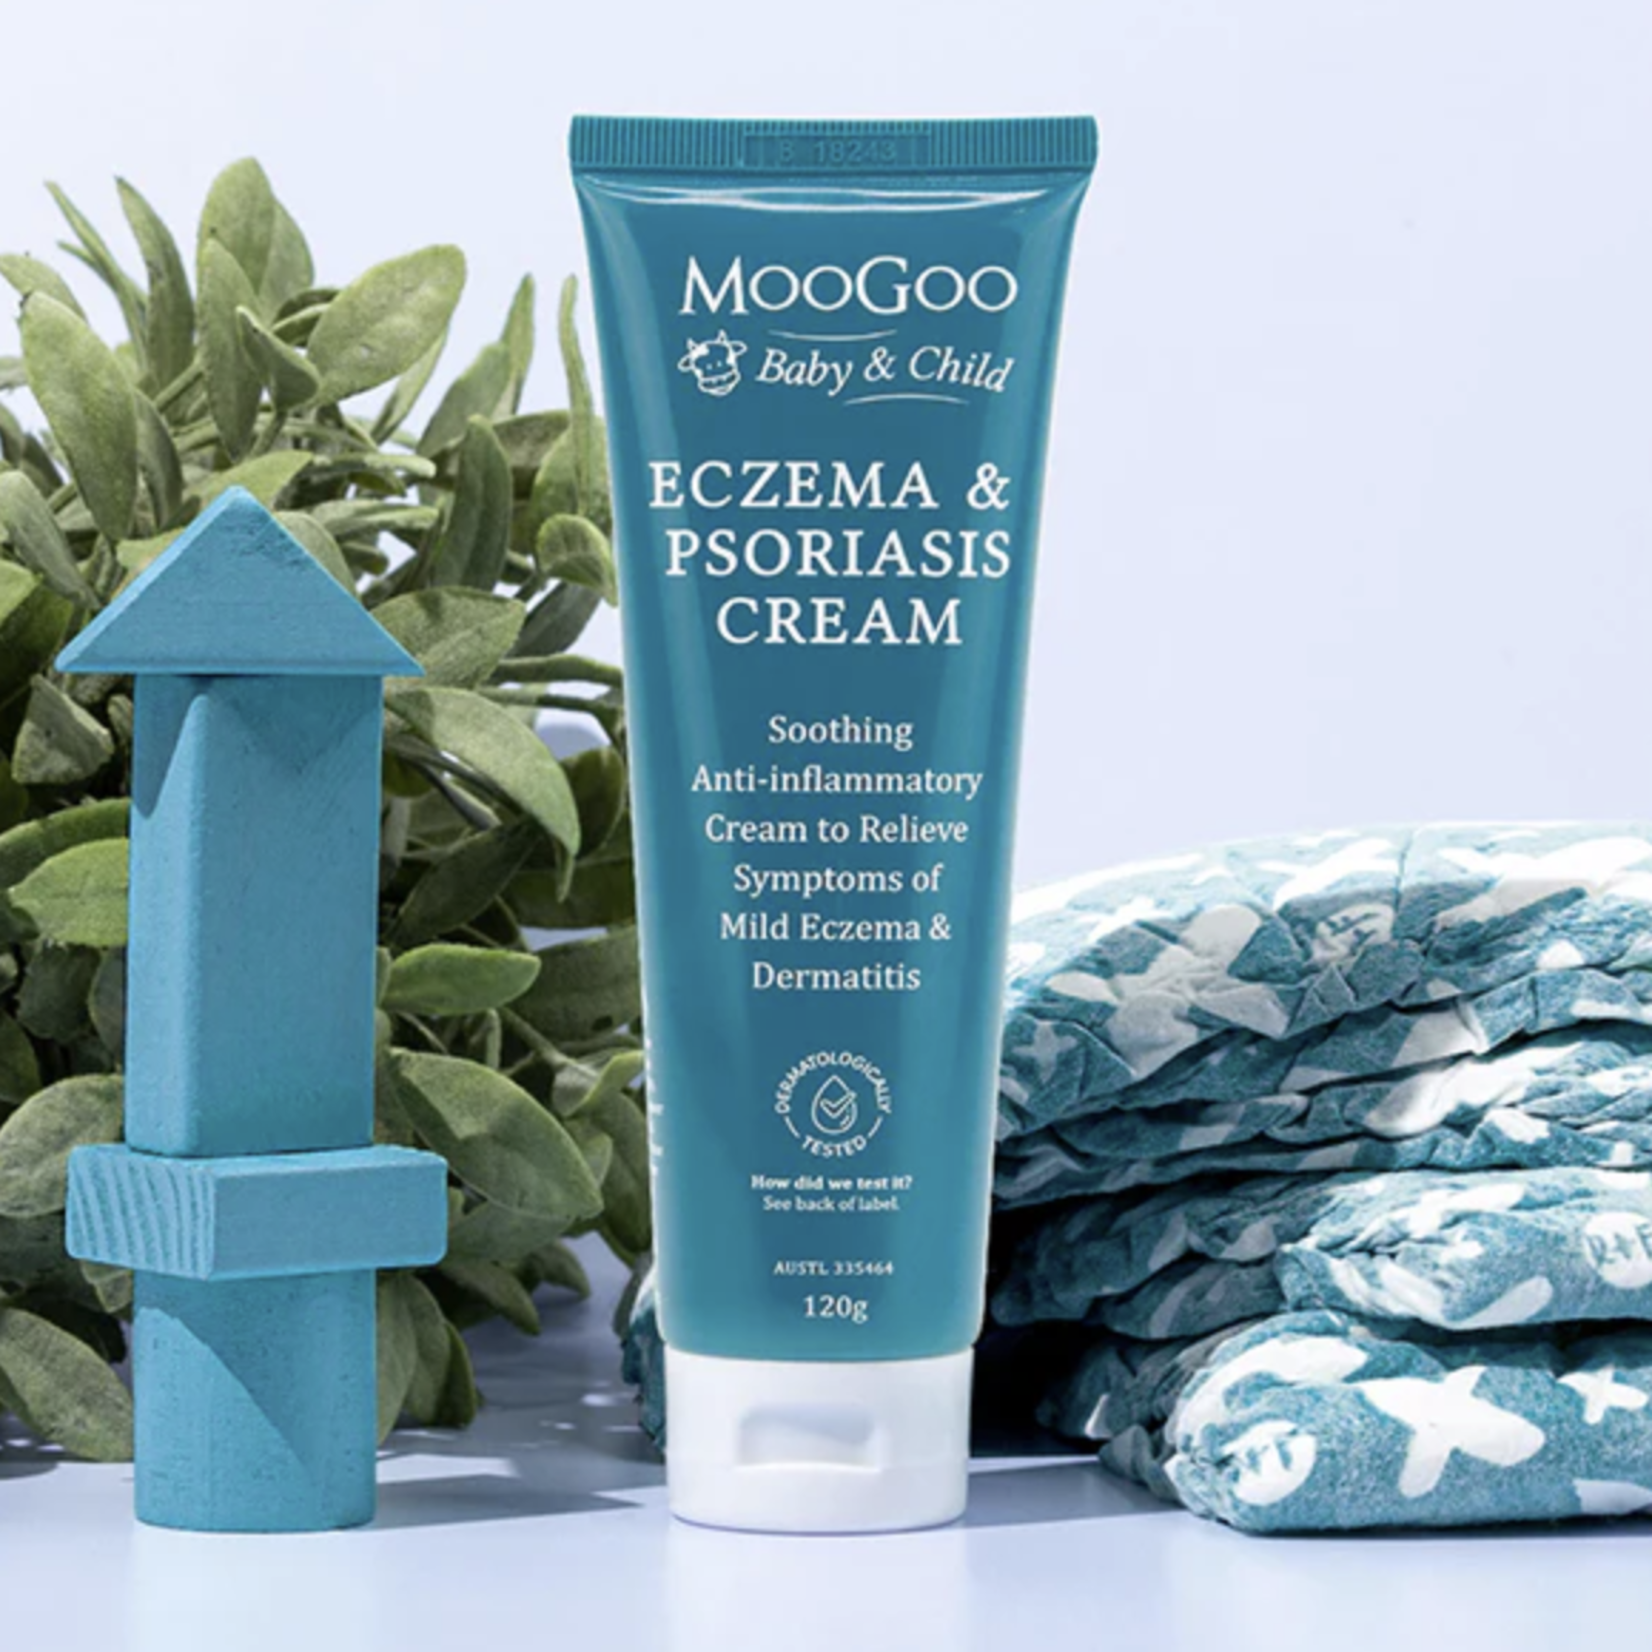 MooGoo Baby Eczema & Psoriasis Cream 120g (AUSTL 335464)